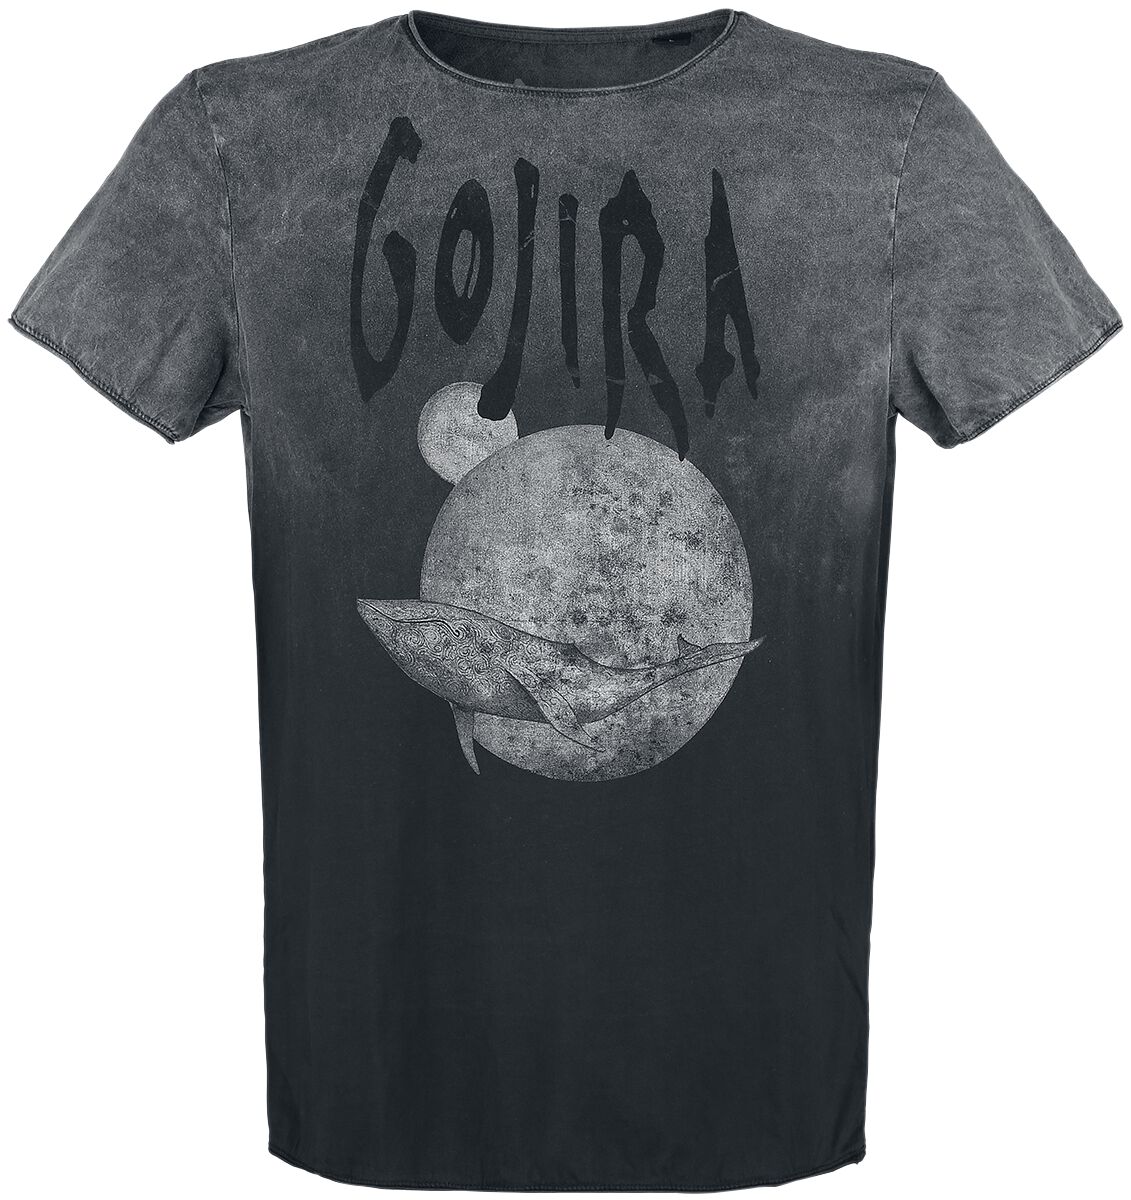 From Mars Reprise T-Shirt dunkelgrau/grau von Gojira